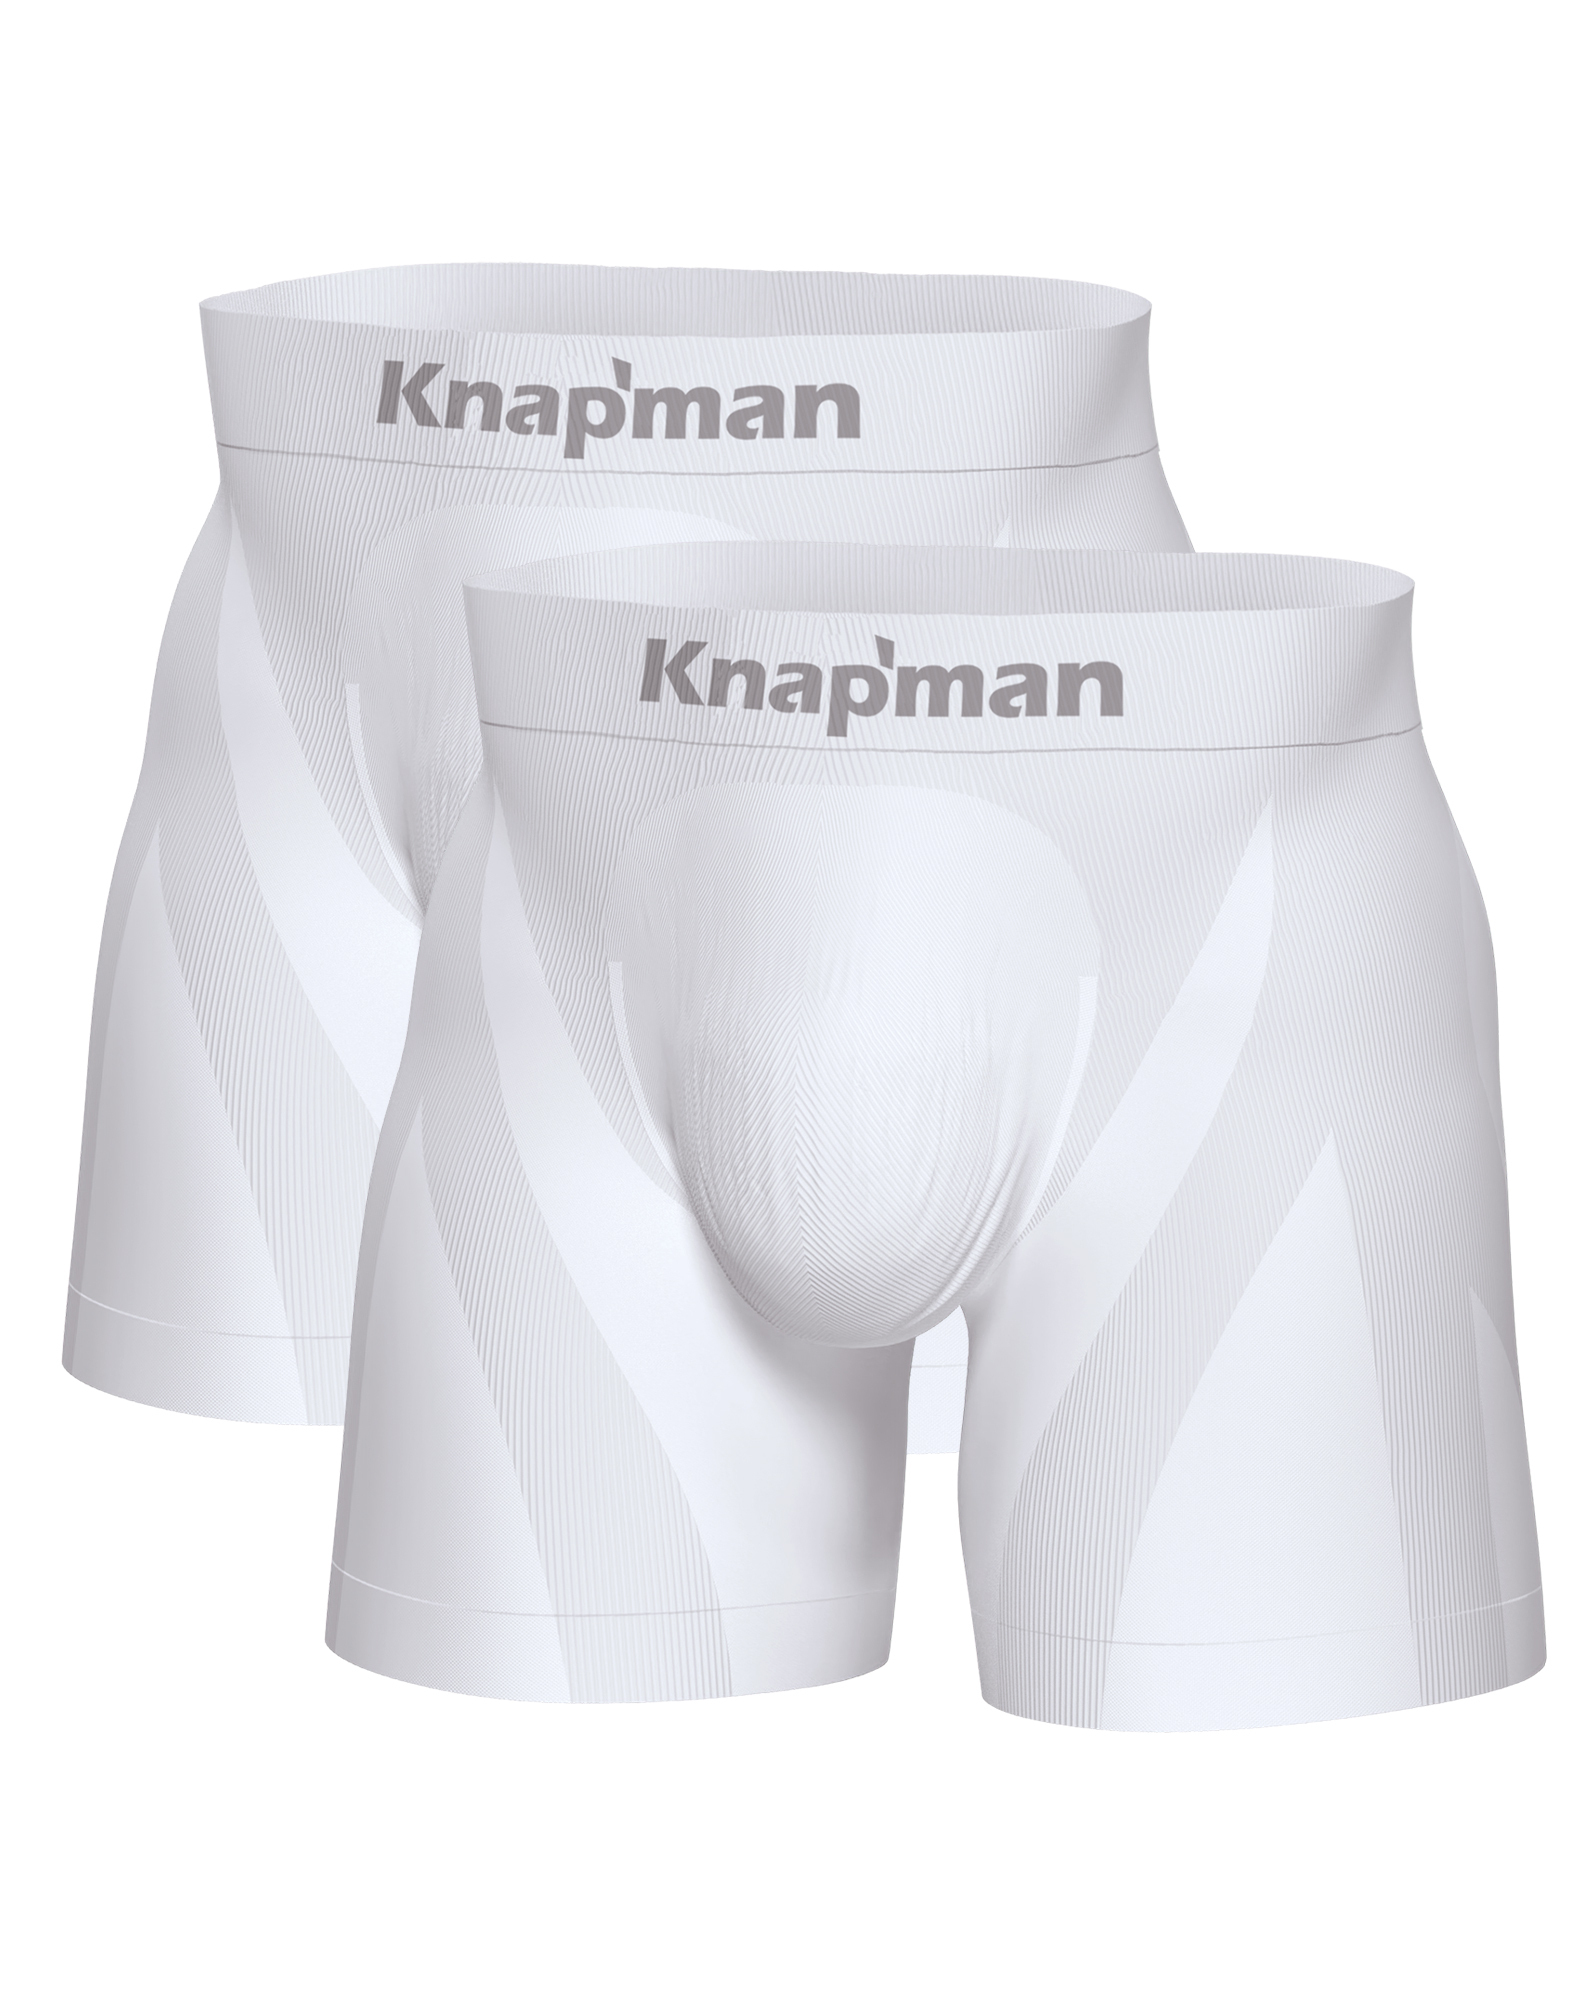 Knapman Ultimate Comfort Boxershort 3.0 White | Twopack